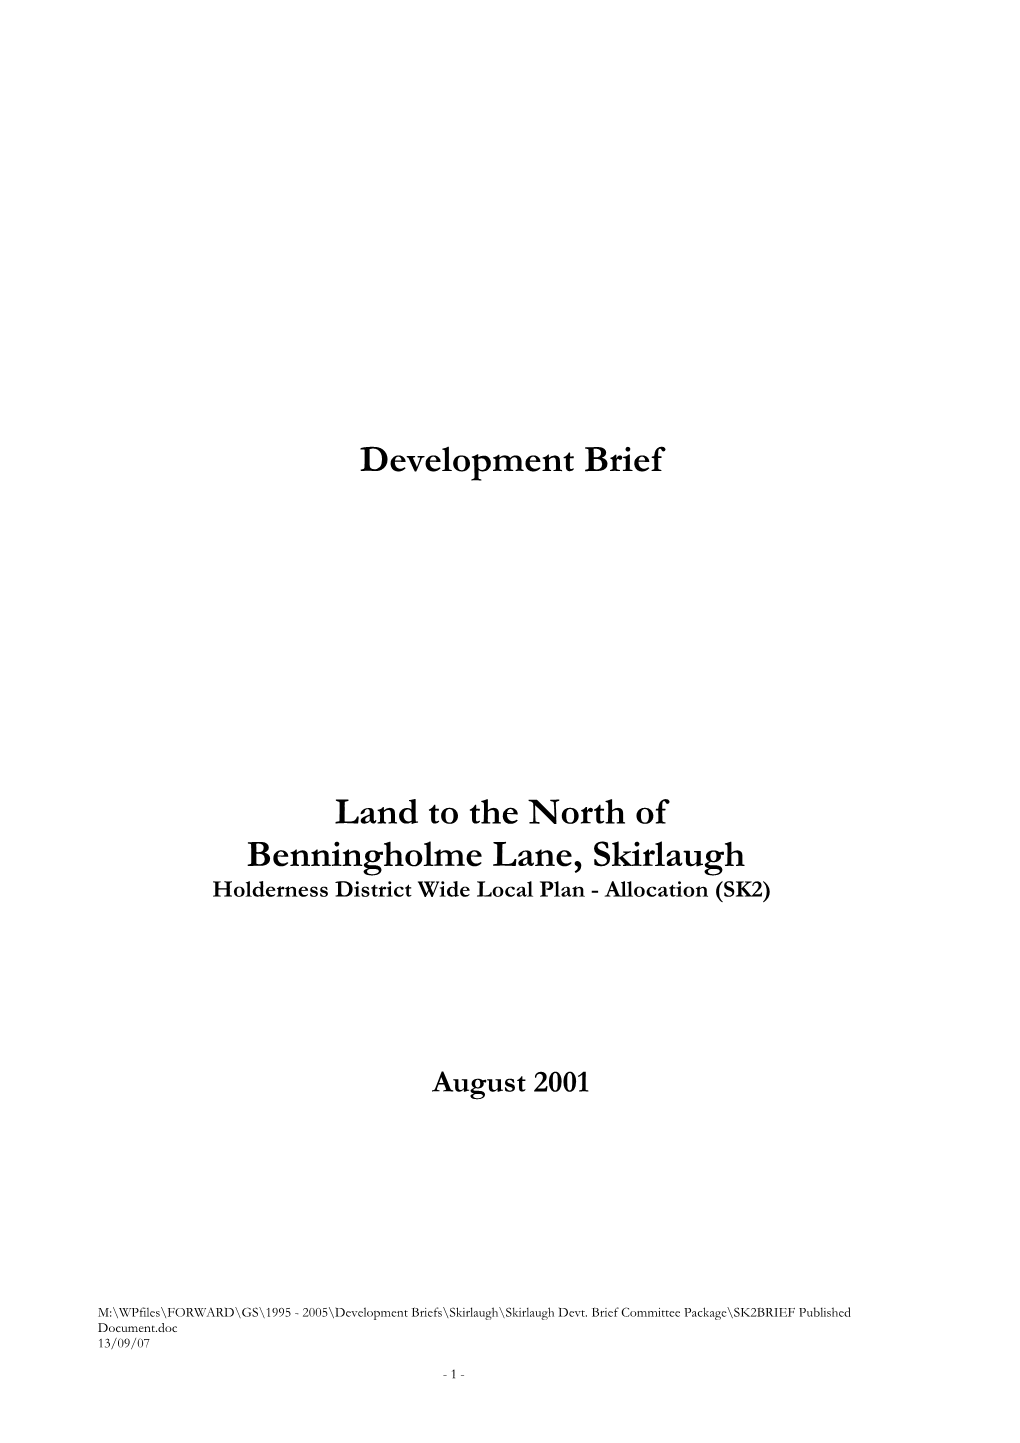 Development Brief Land to the North of Benningholme Lane, Skirlaugh